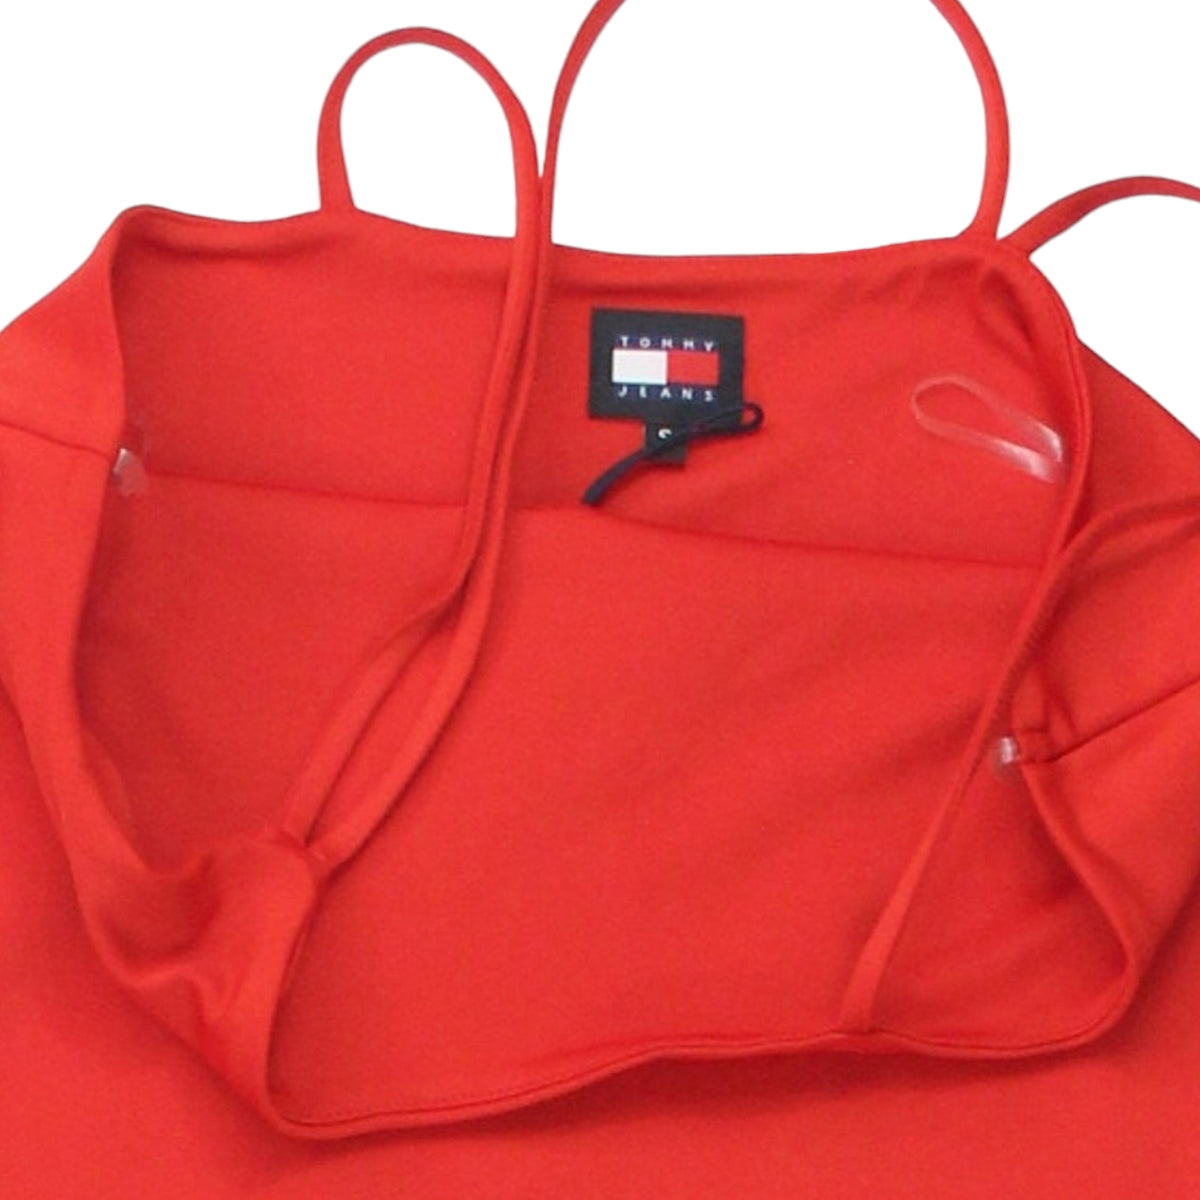 Tommy Hilfiger Red Multi-Strap Body Con Dress